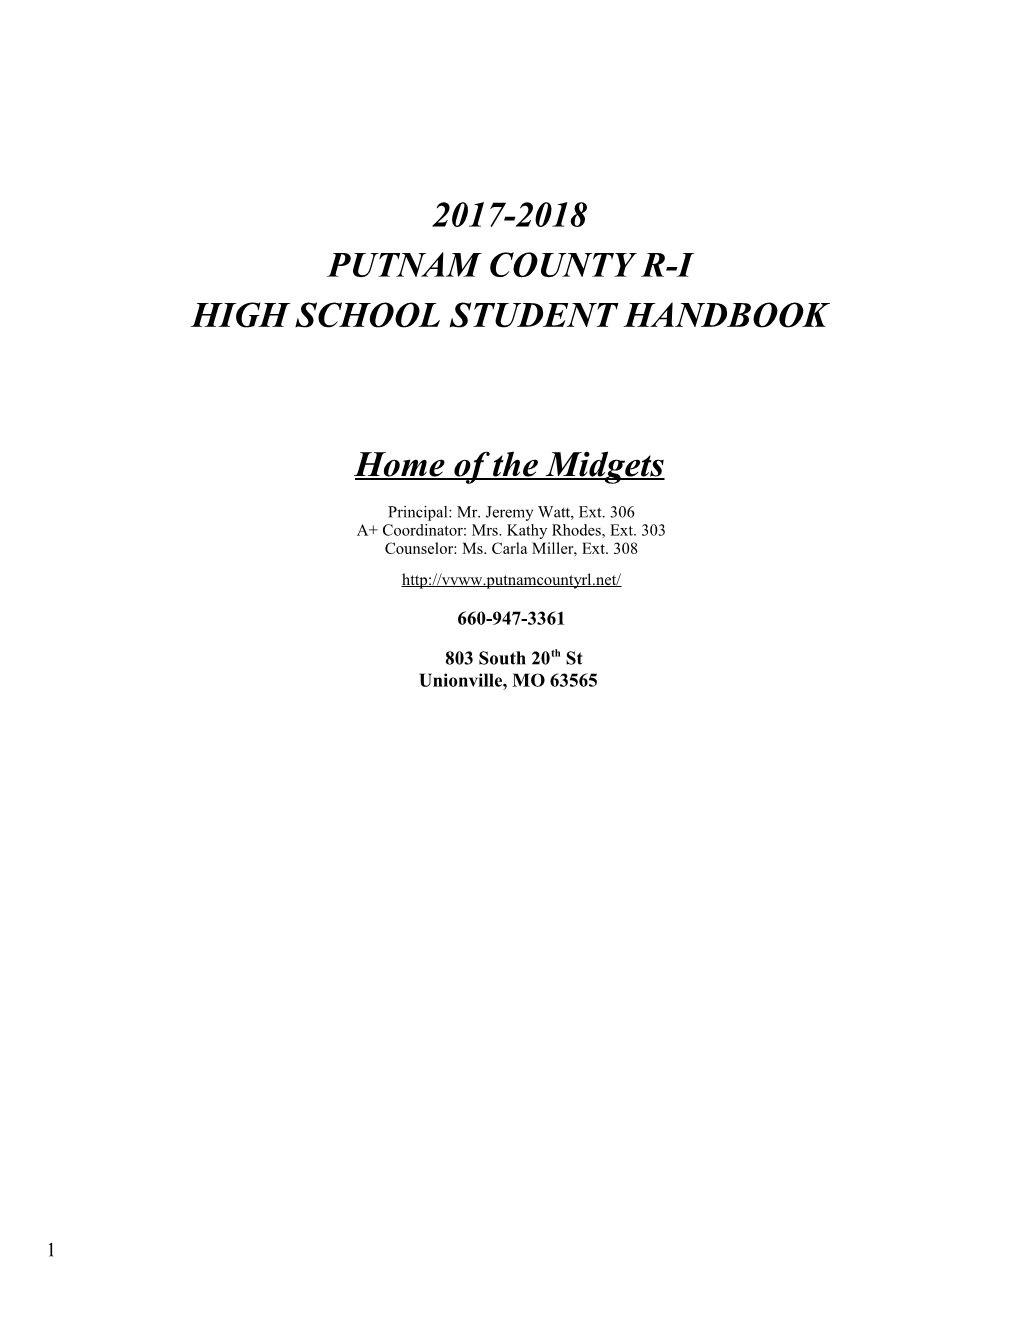 High School Student Handbook